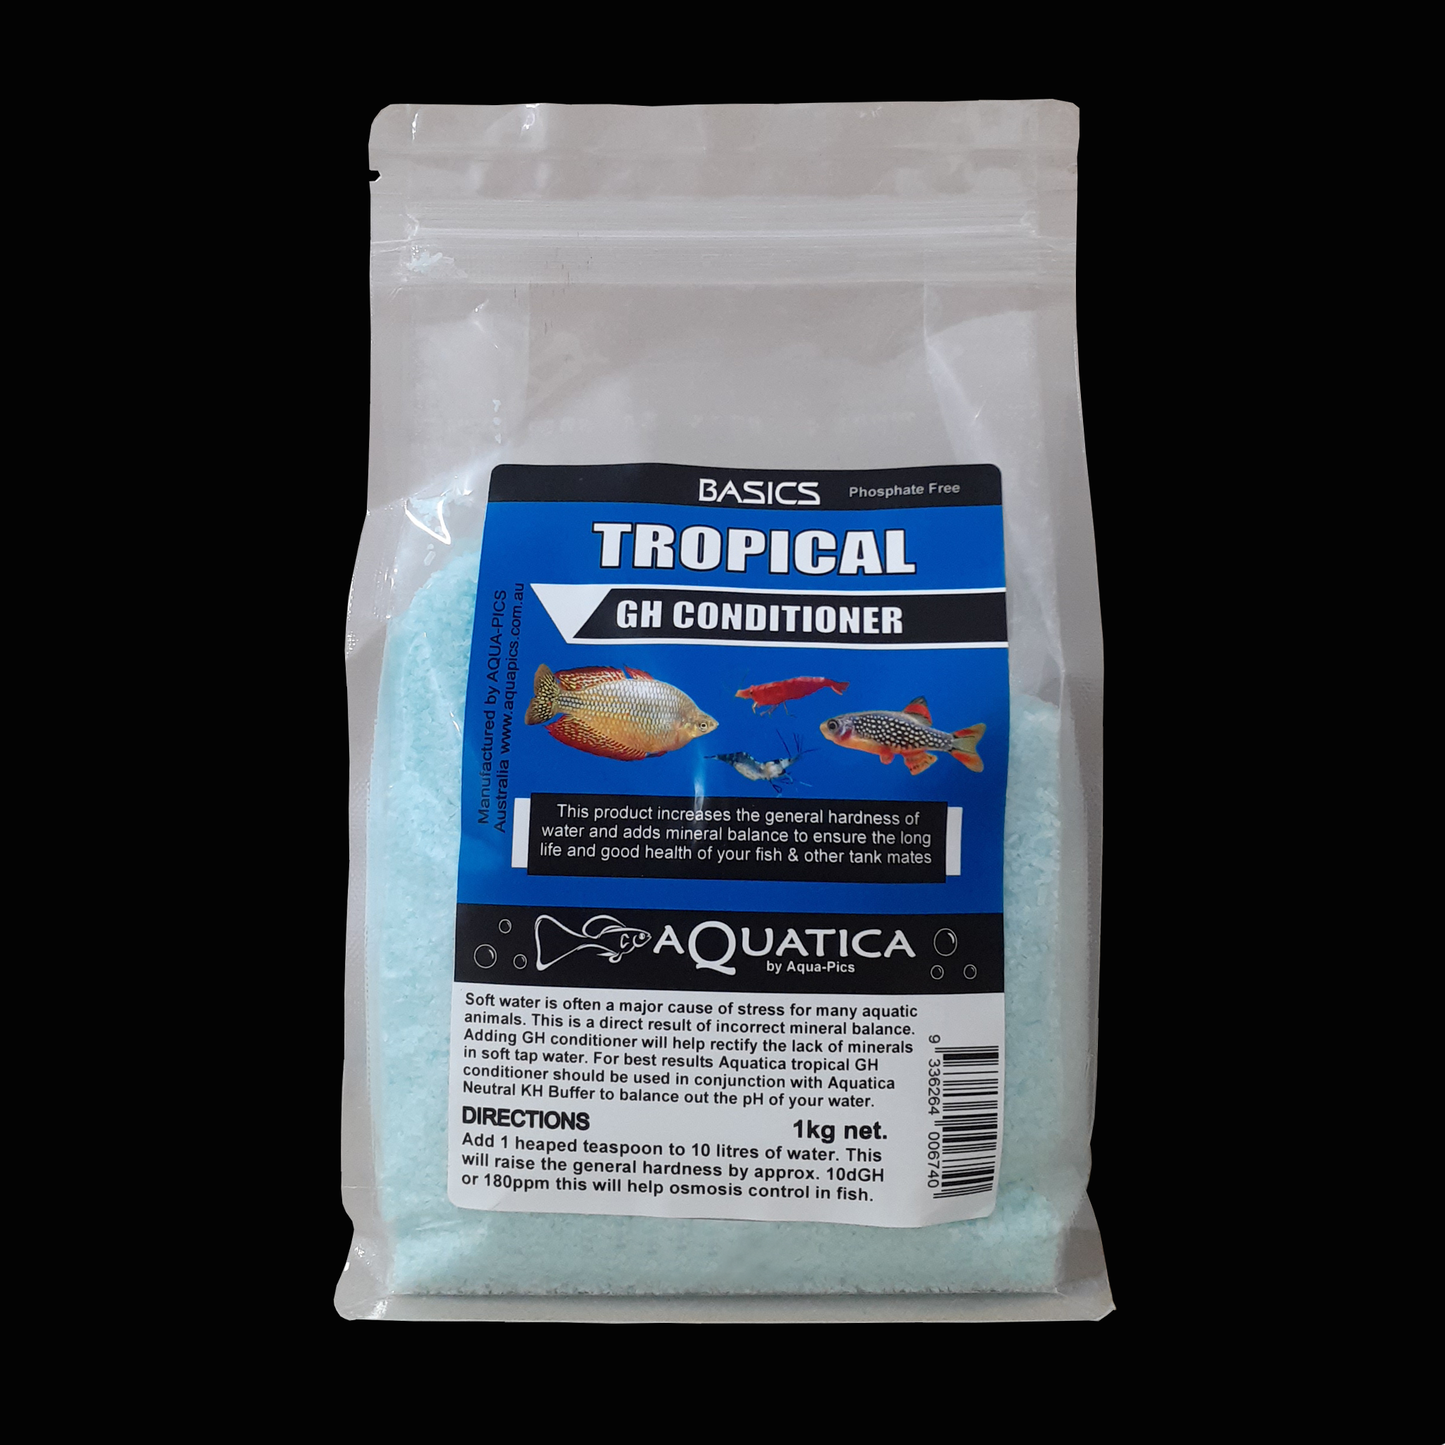 Aquatica Basics Tropical GH Conditioner 1kg bag